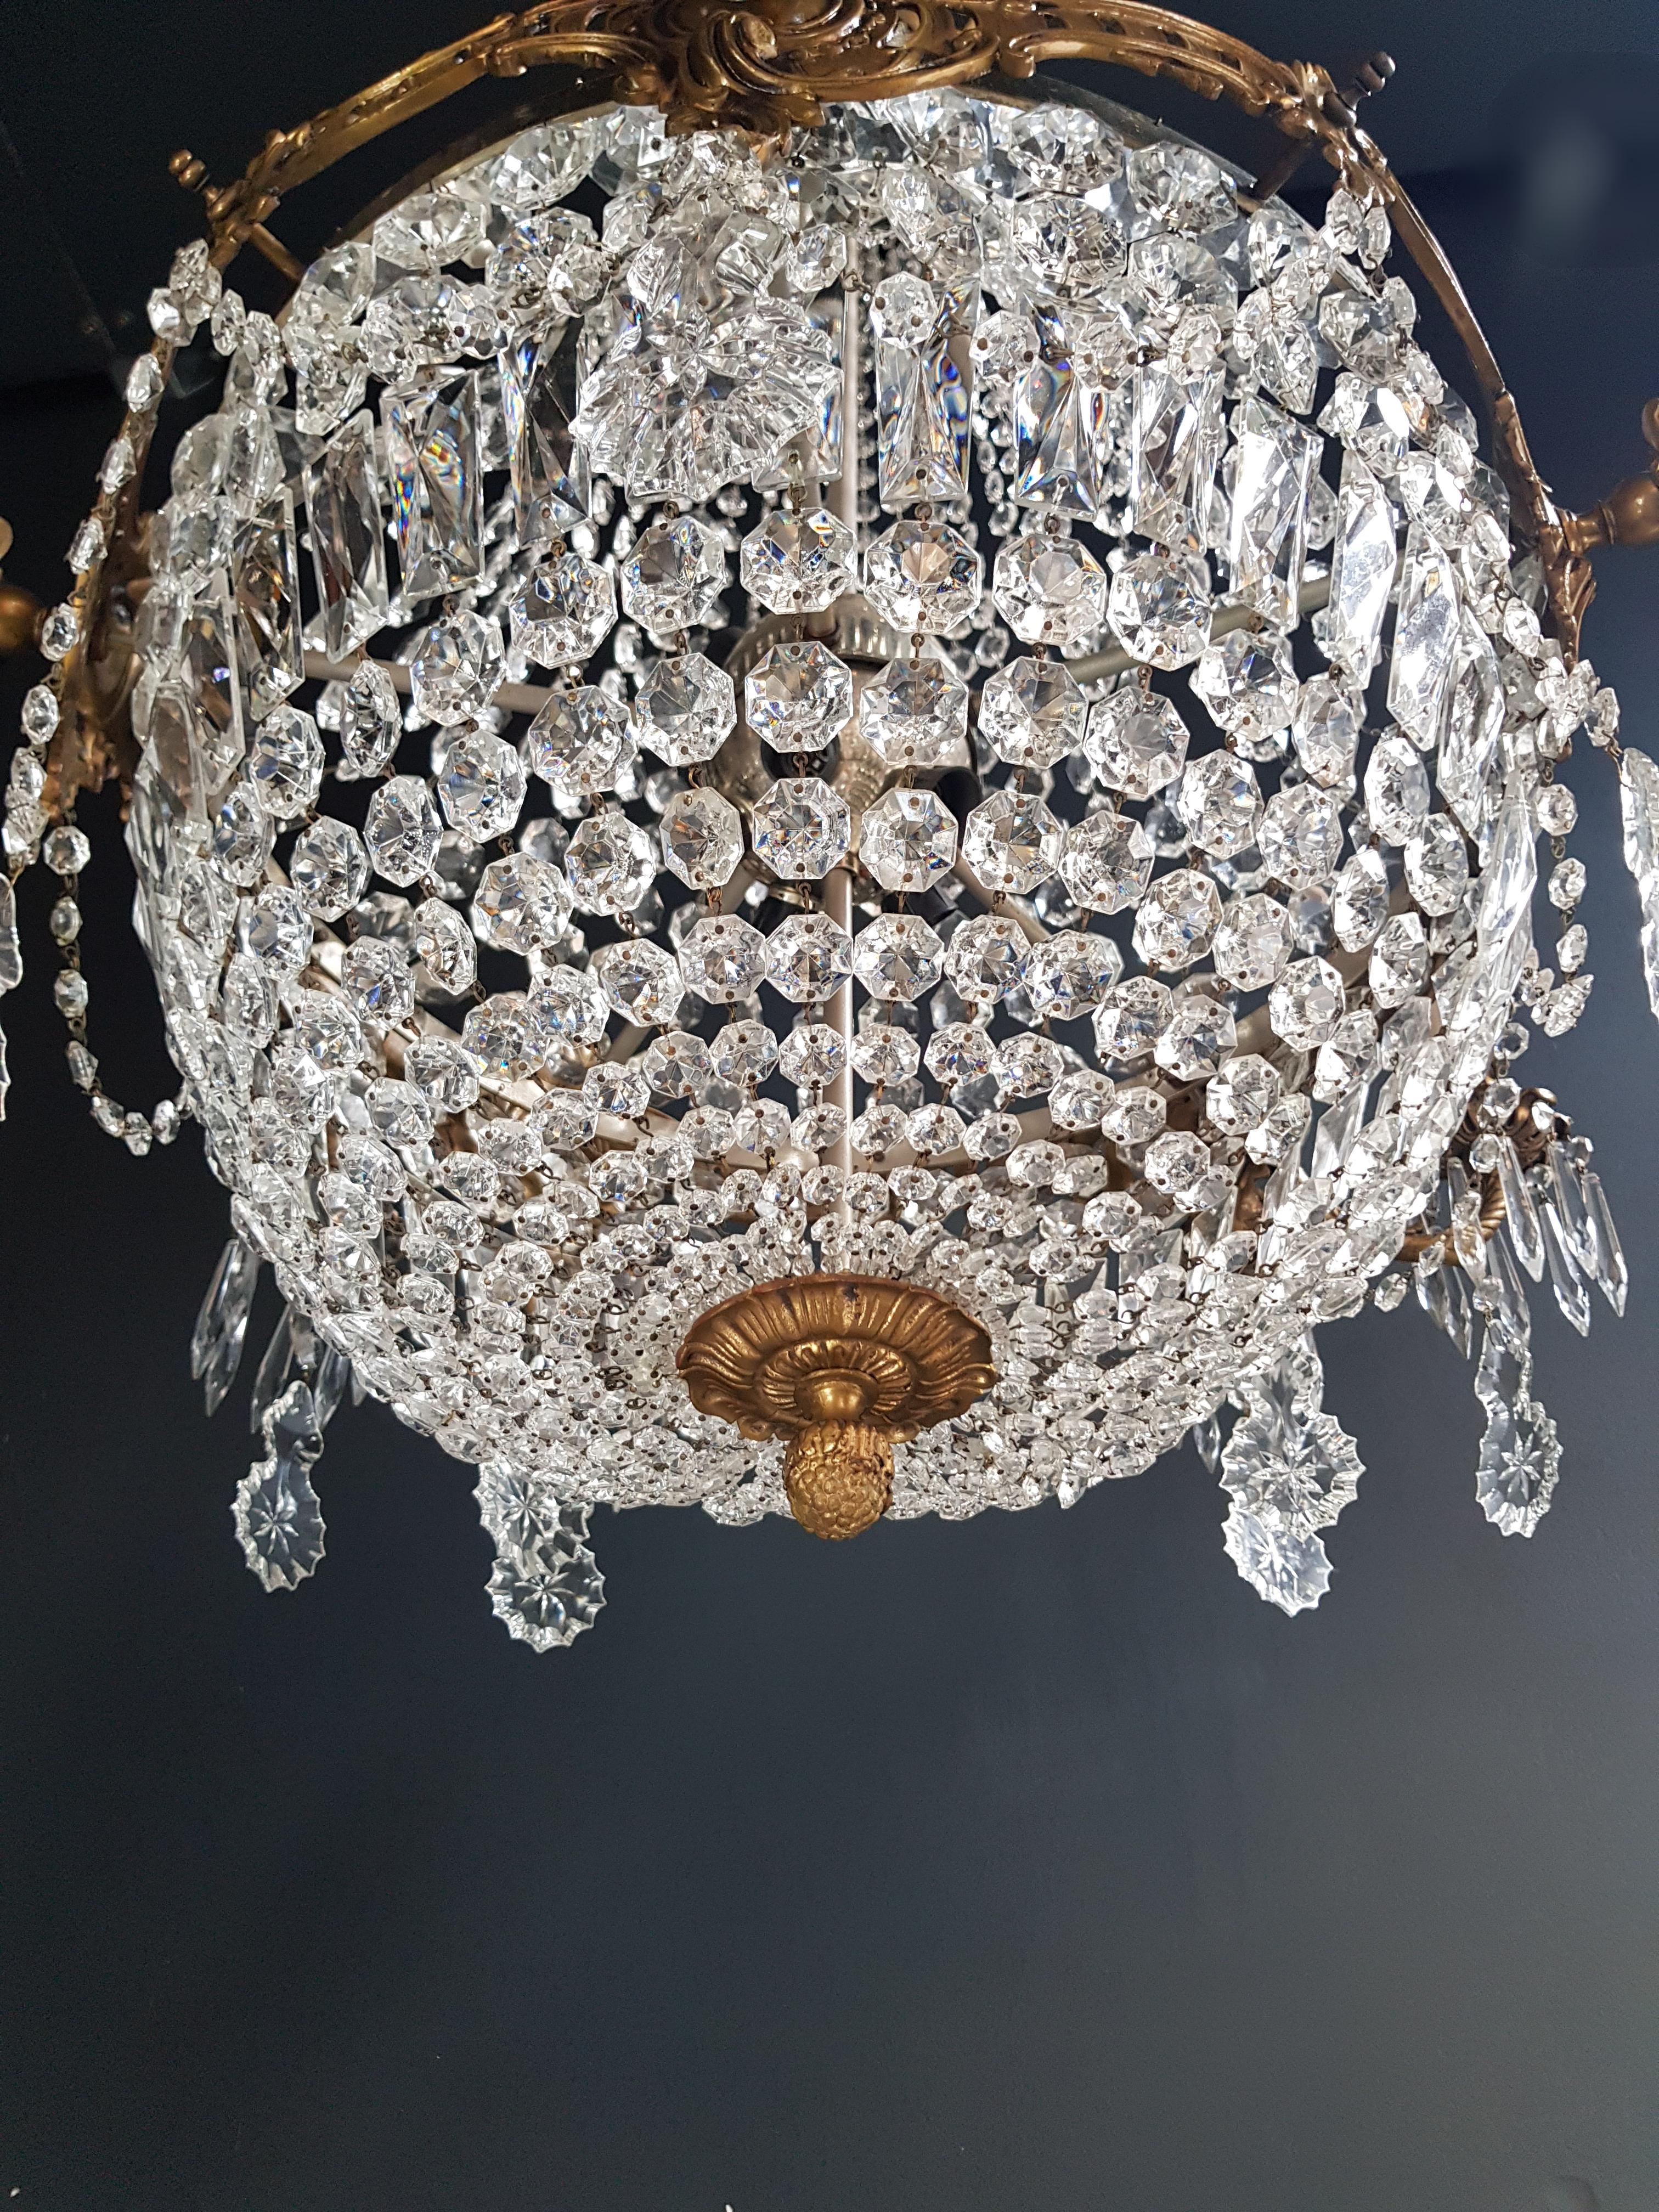 European Montgolfiè Empire Sac a Pearl Chandelier Crystal Lustre Ceiling Lamp Antique